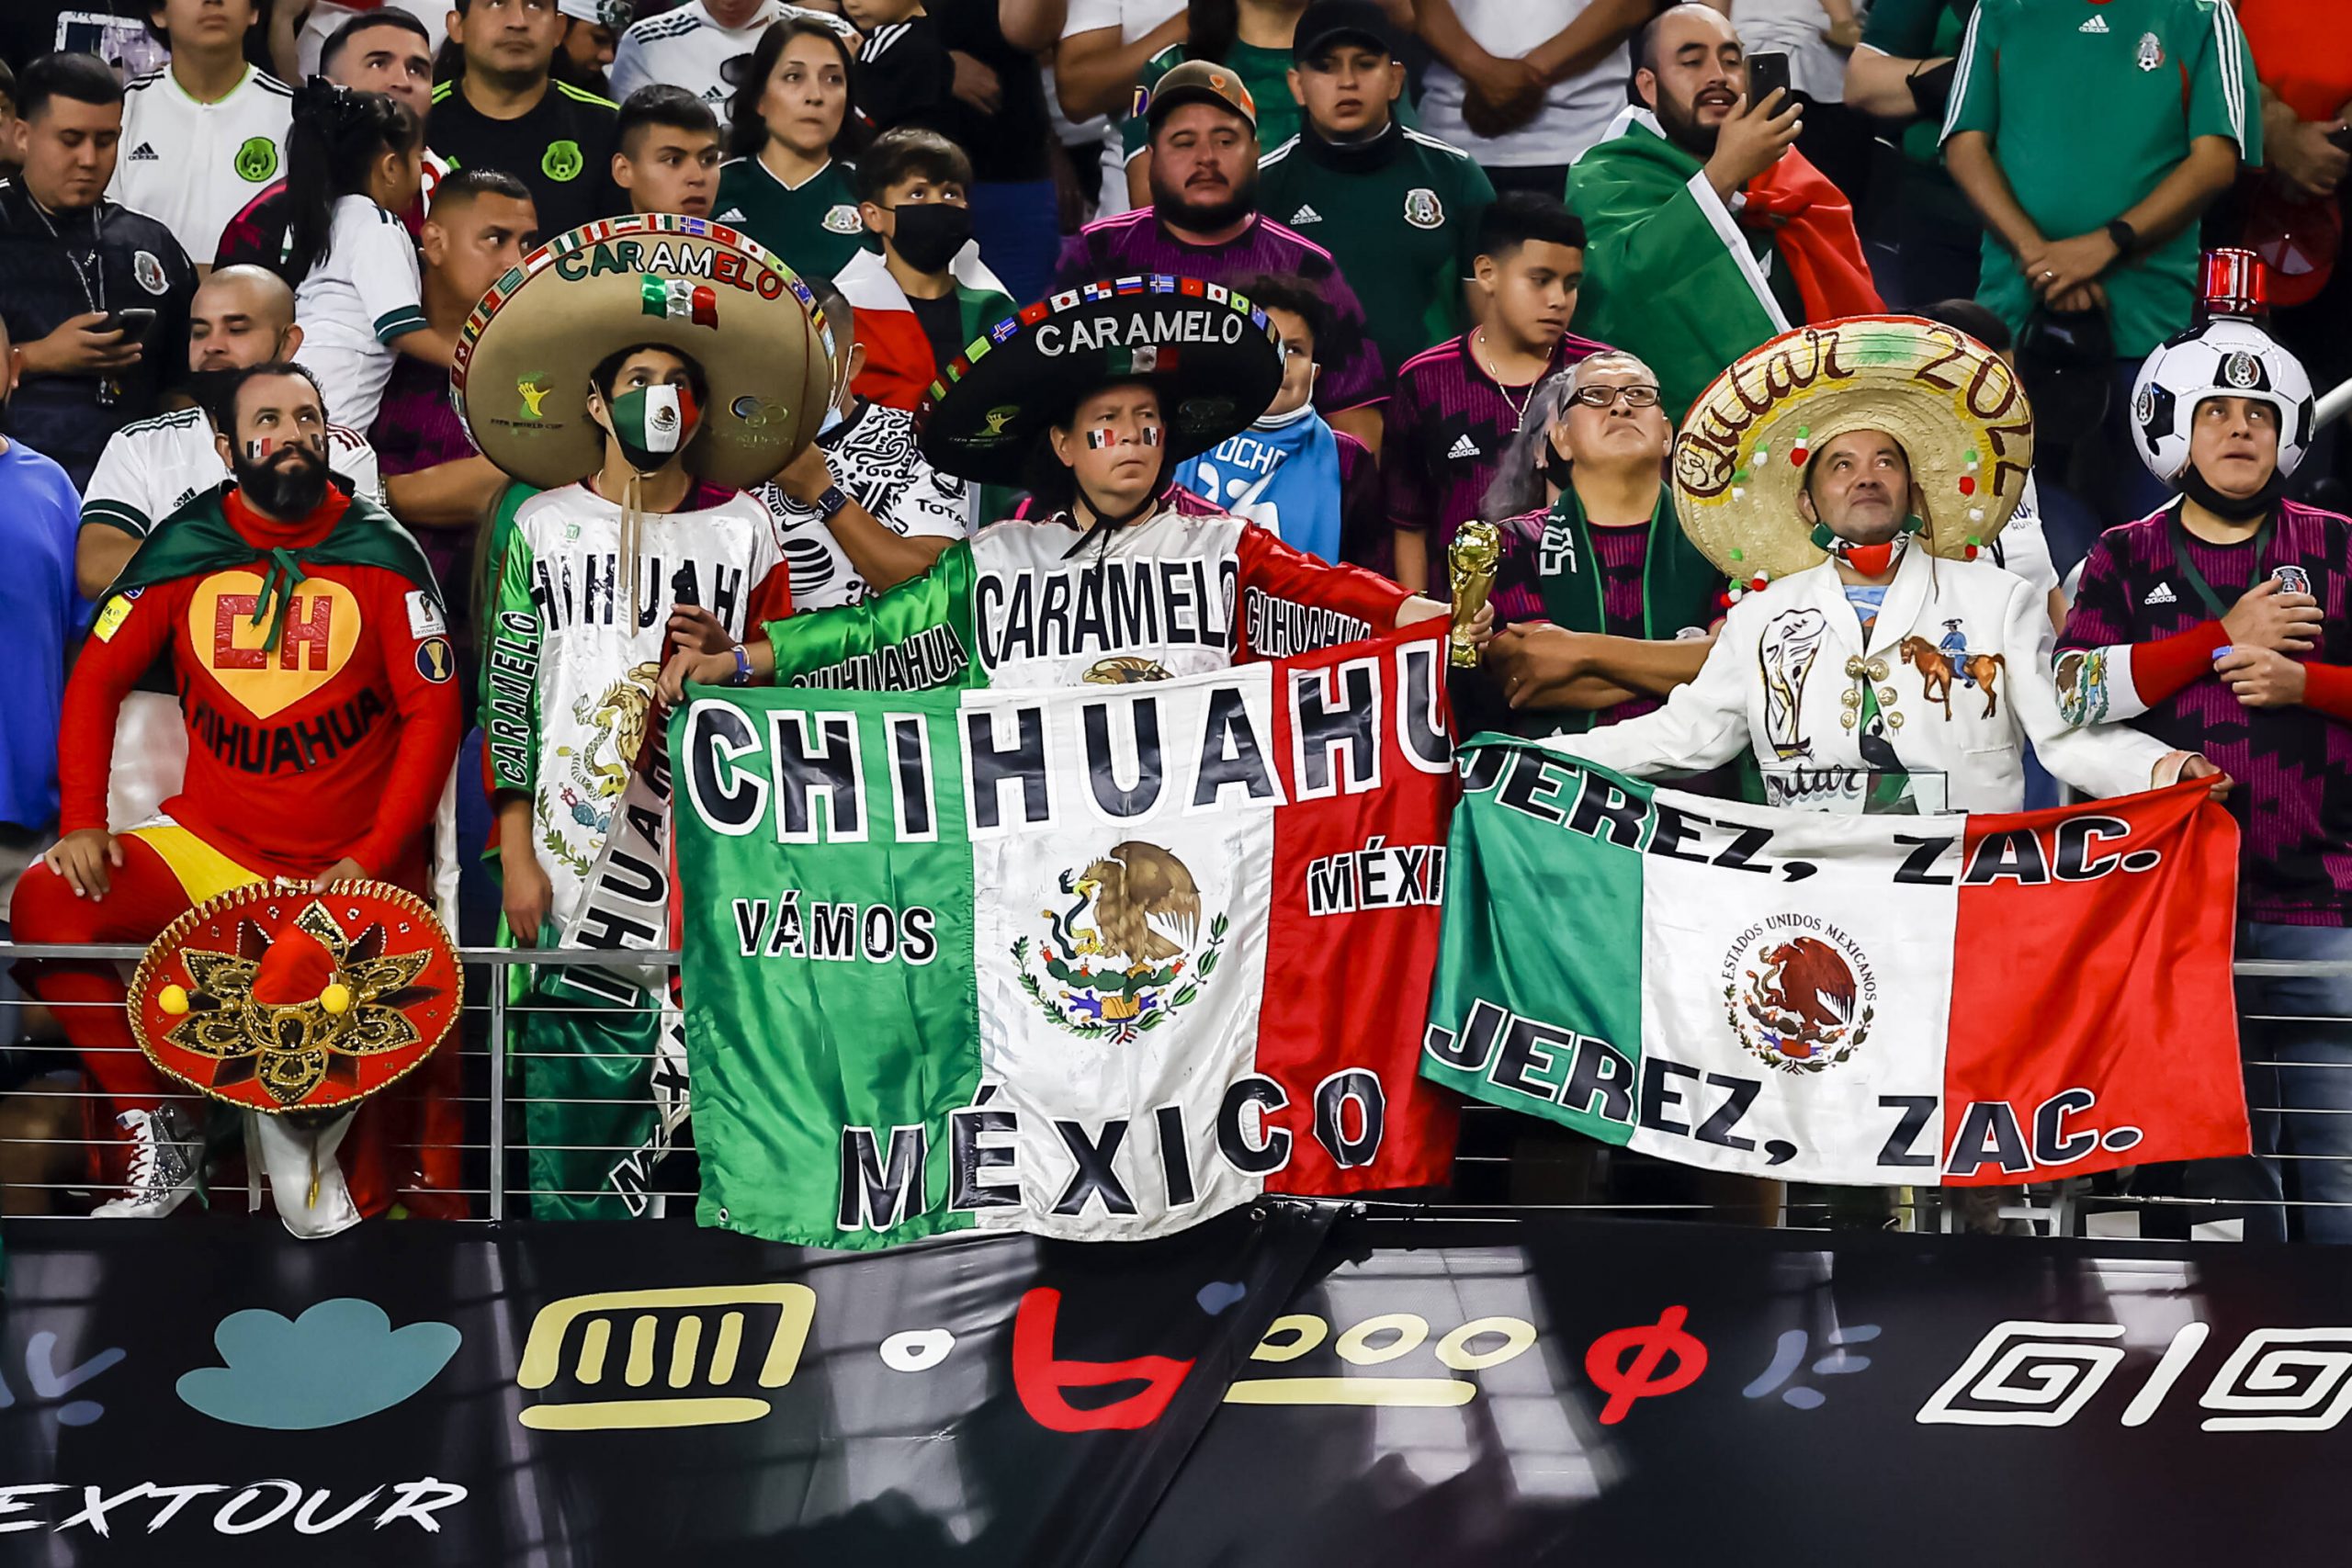 FIFA bestraft Mexiko nach homophoben Aussagen